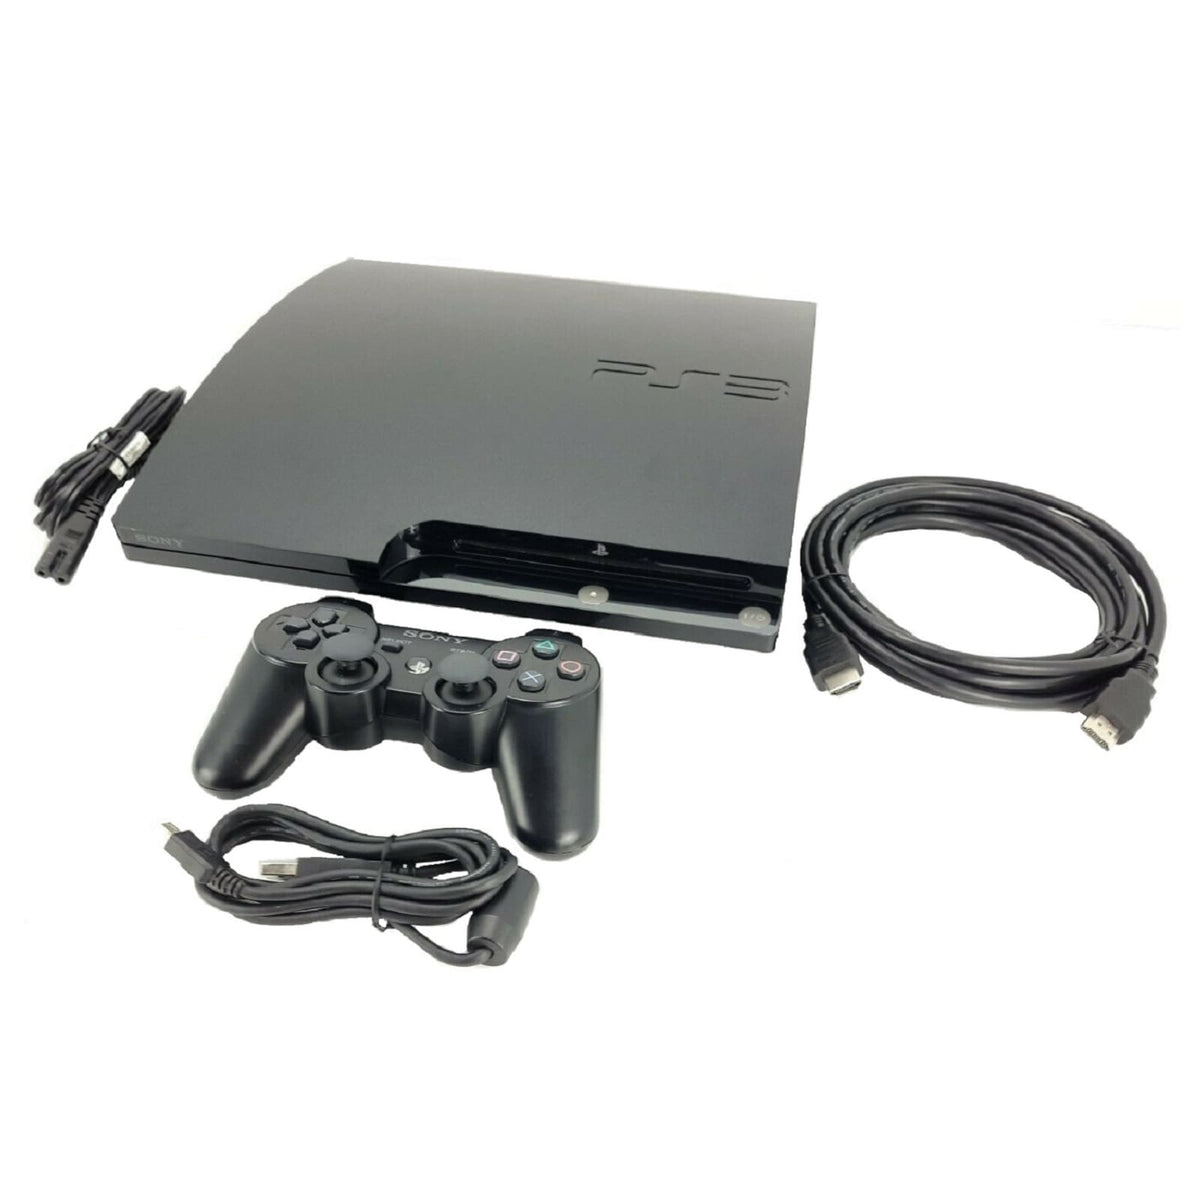 Black PlayStation 3 Sony PS3 Slim 1 Tb 94 Top Games Refurbished, Model  Name/Number: P3S1000UDMN